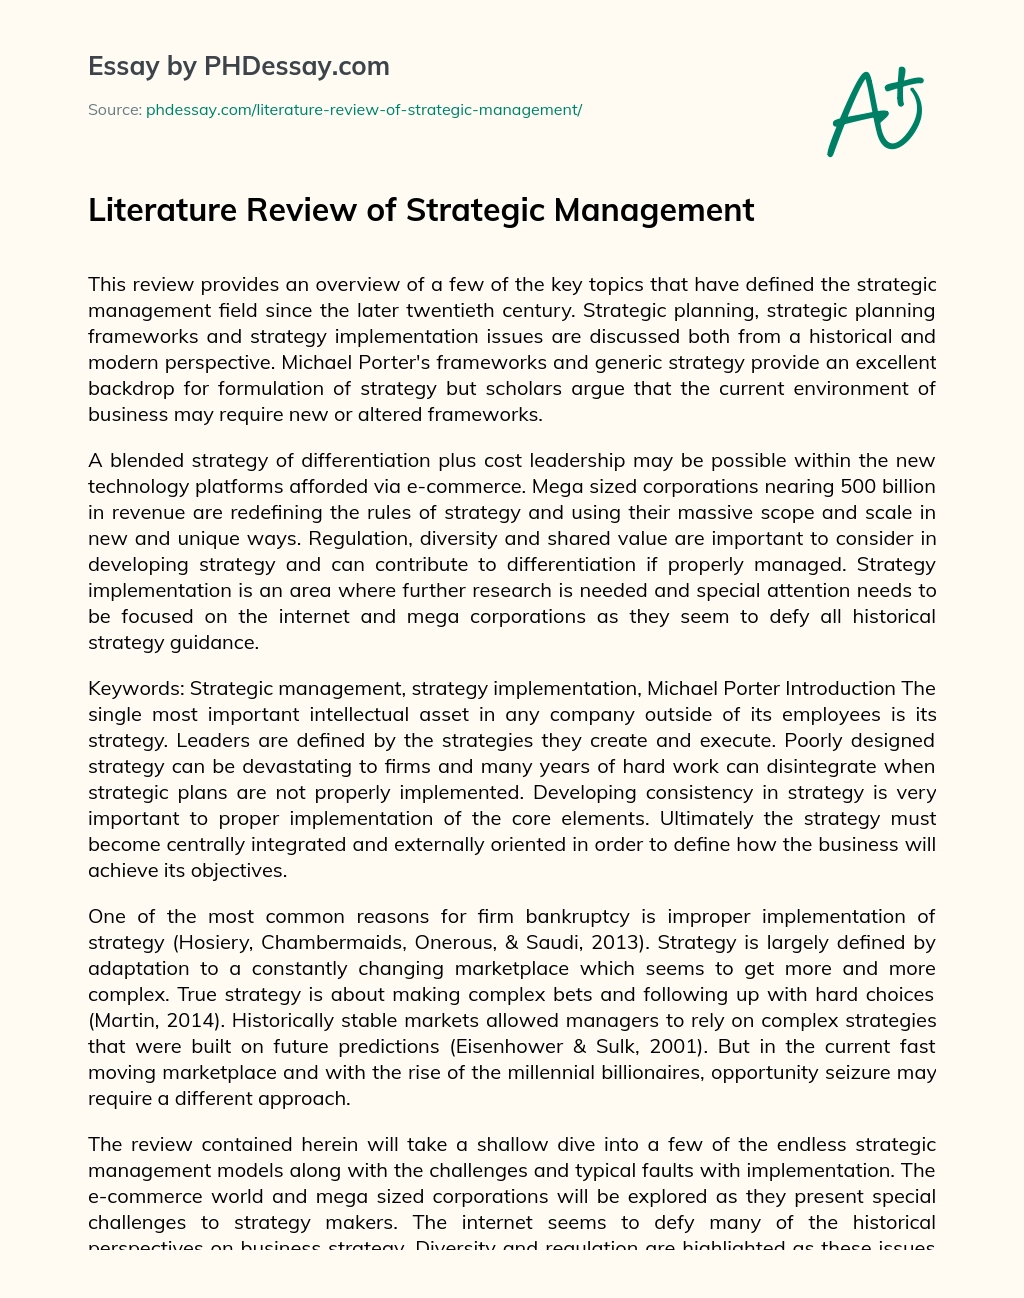 Literature Review of Strategic Management essay